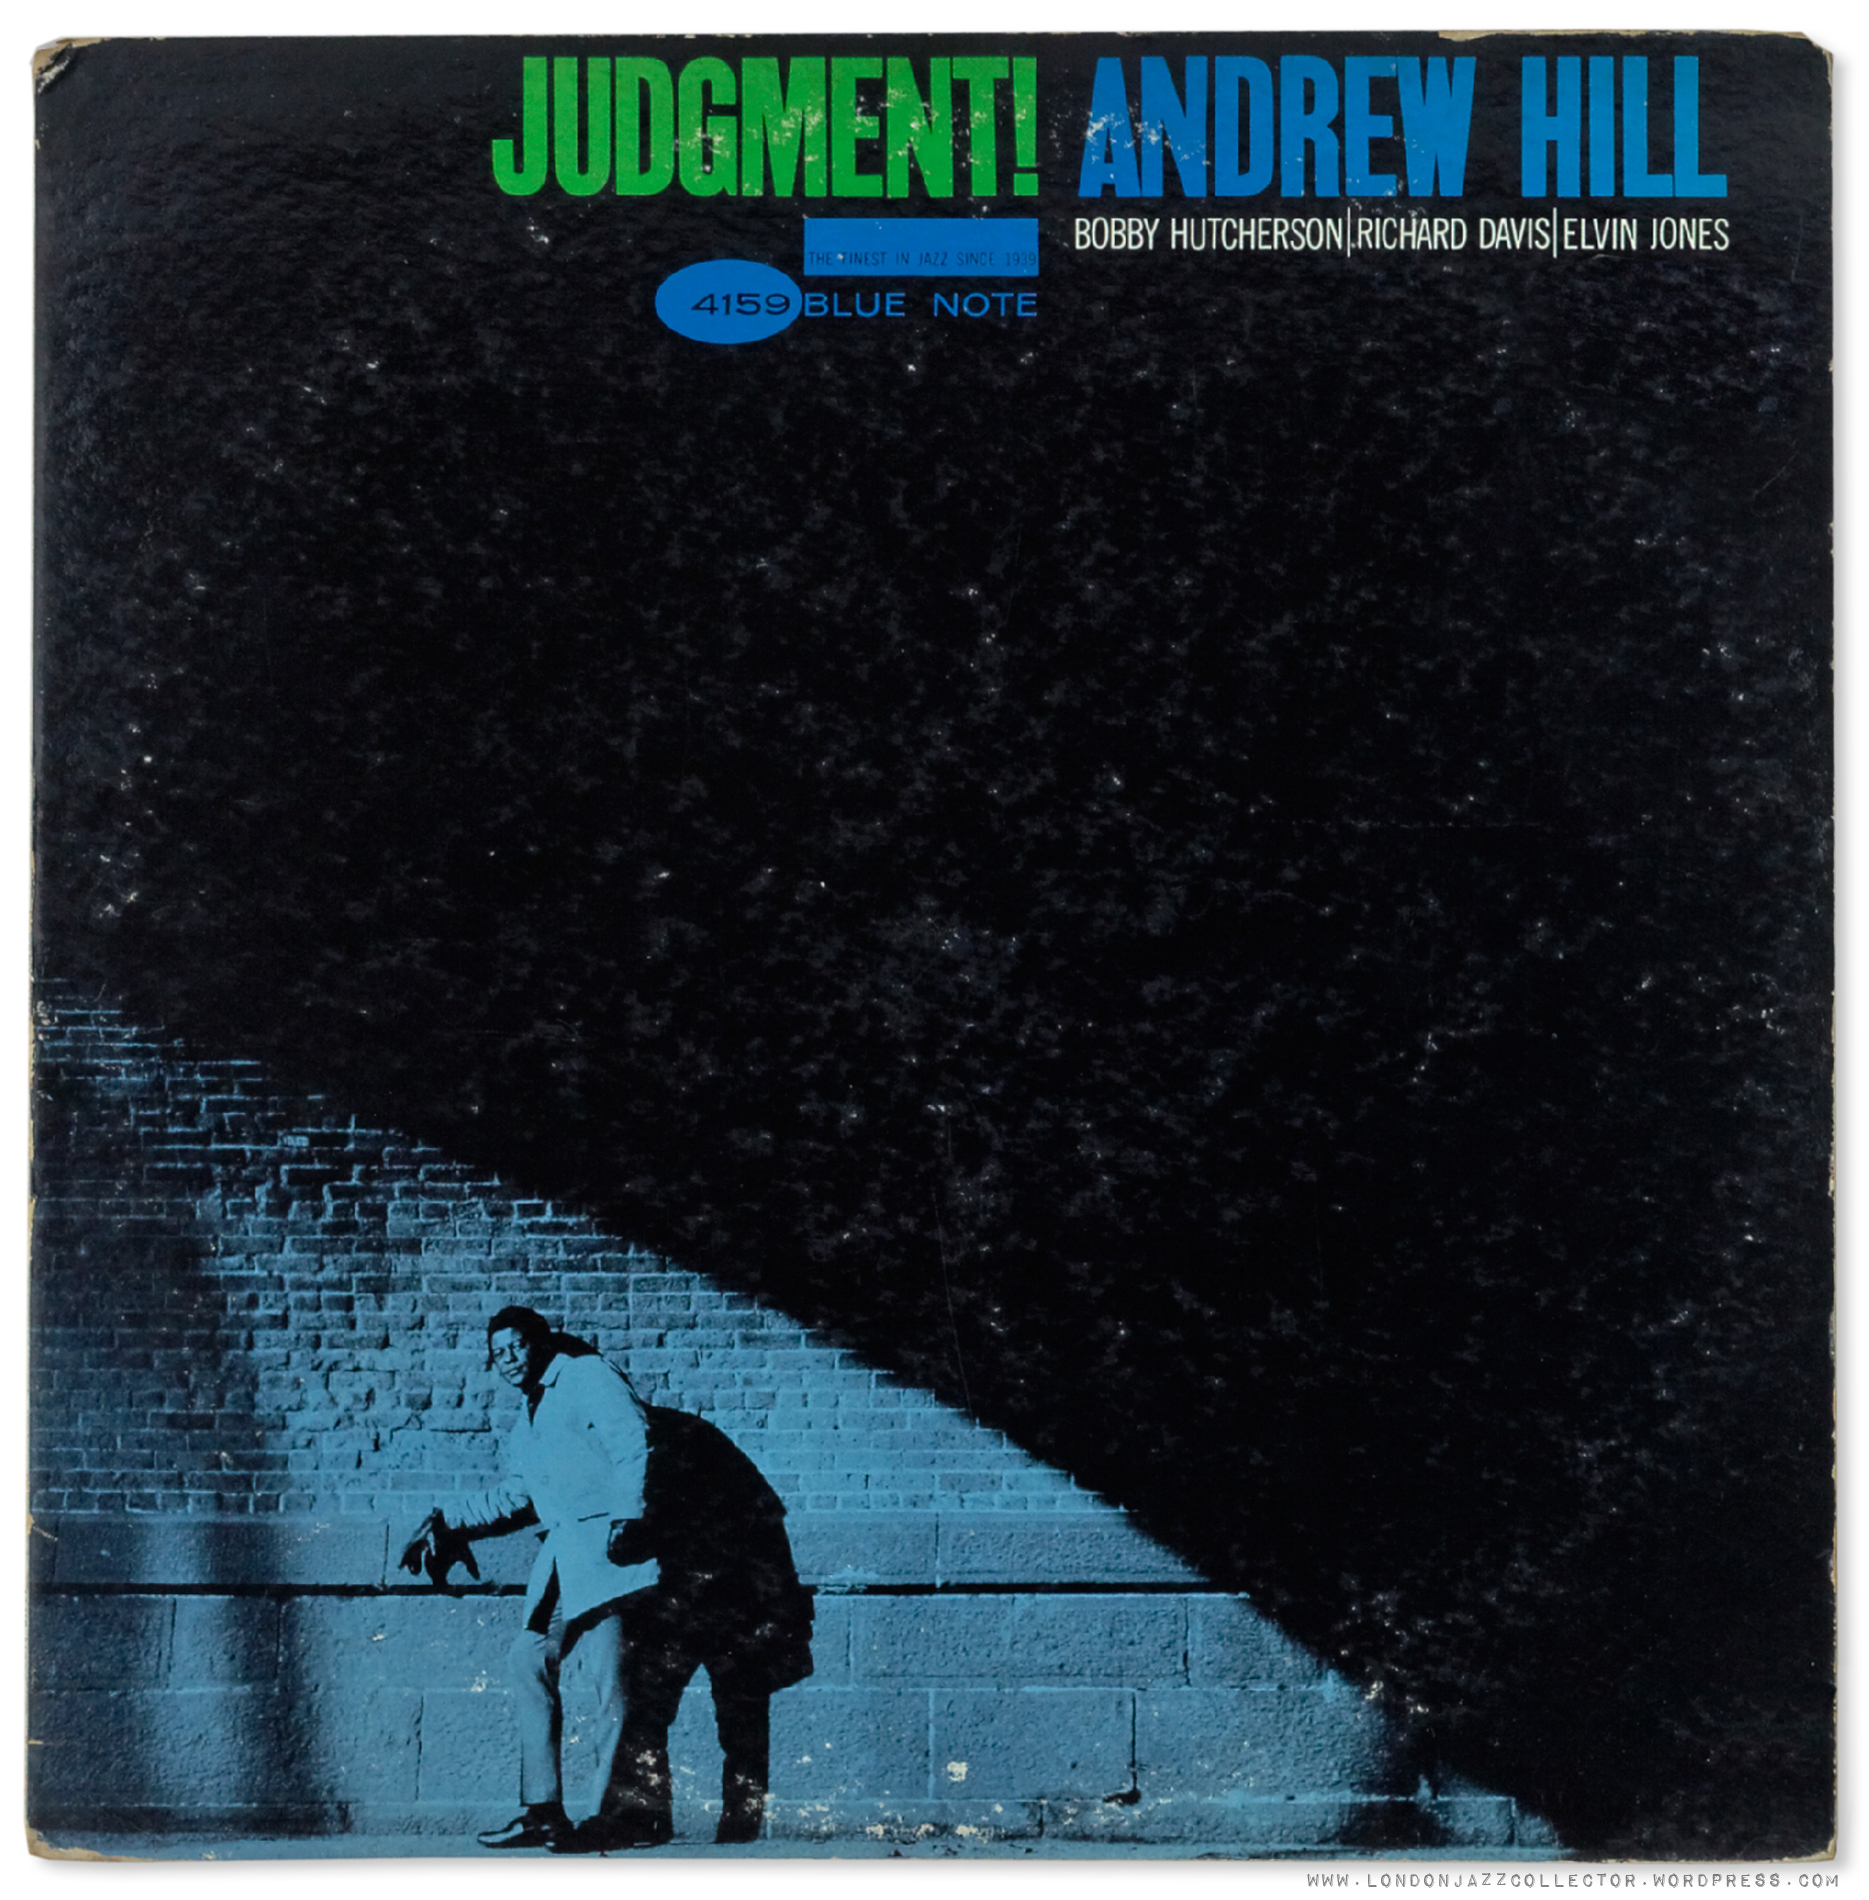 andrew-hill-judgement-cover-1900-ljc-1.j